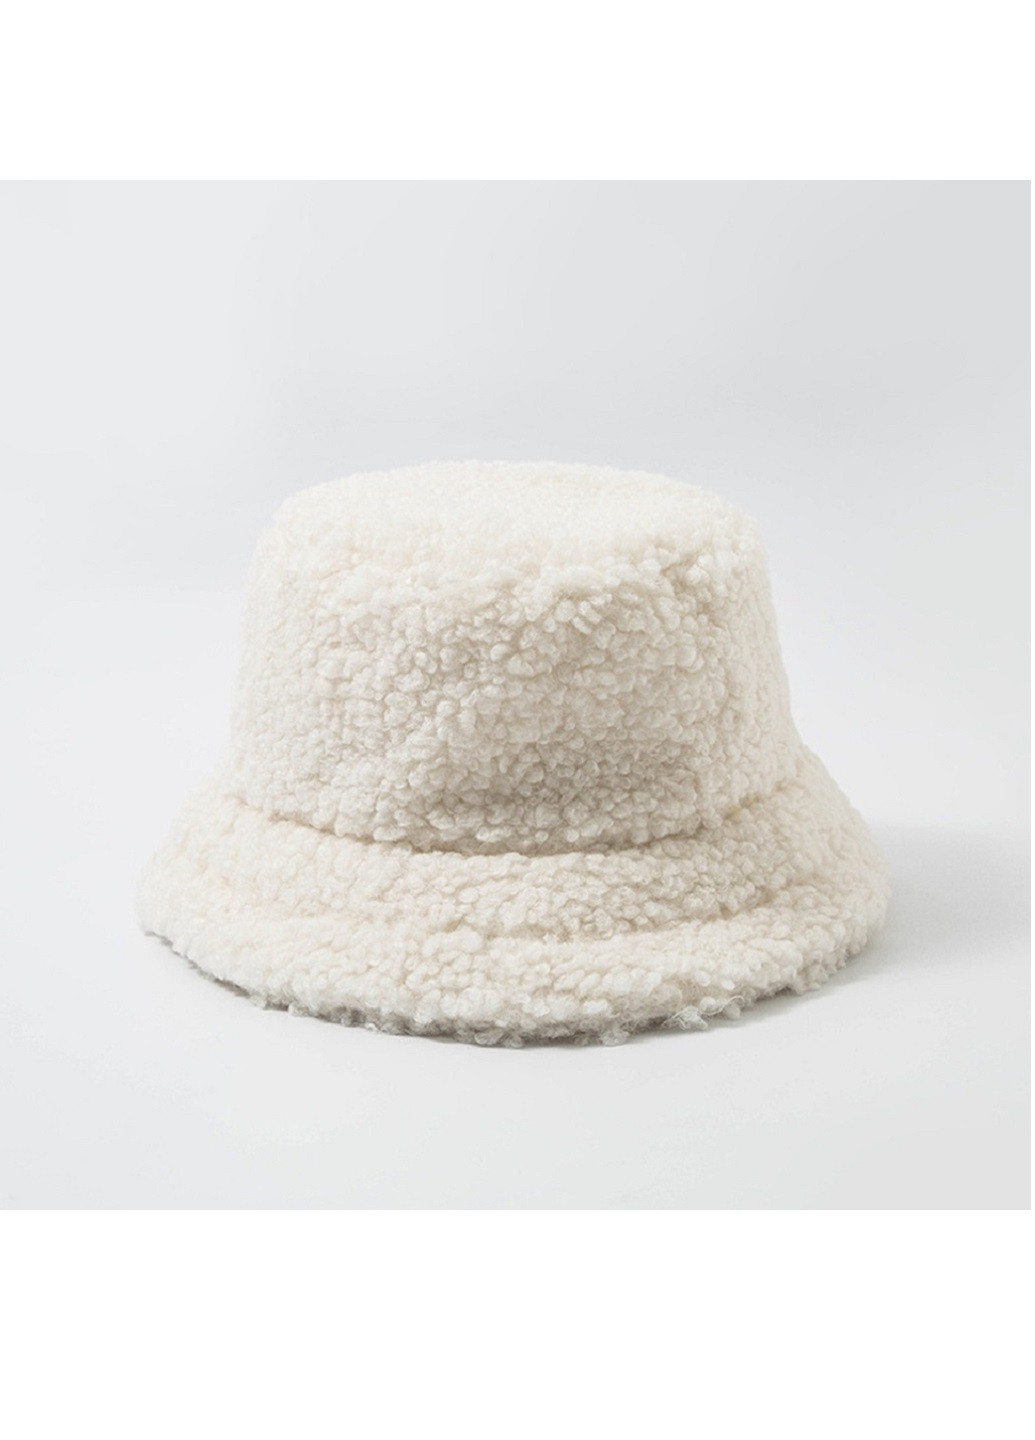 Женская меховая зимняя шапка панама теплая плюшевая пушистая Тедди барашек каракуль Серый NoName панама (250515521)